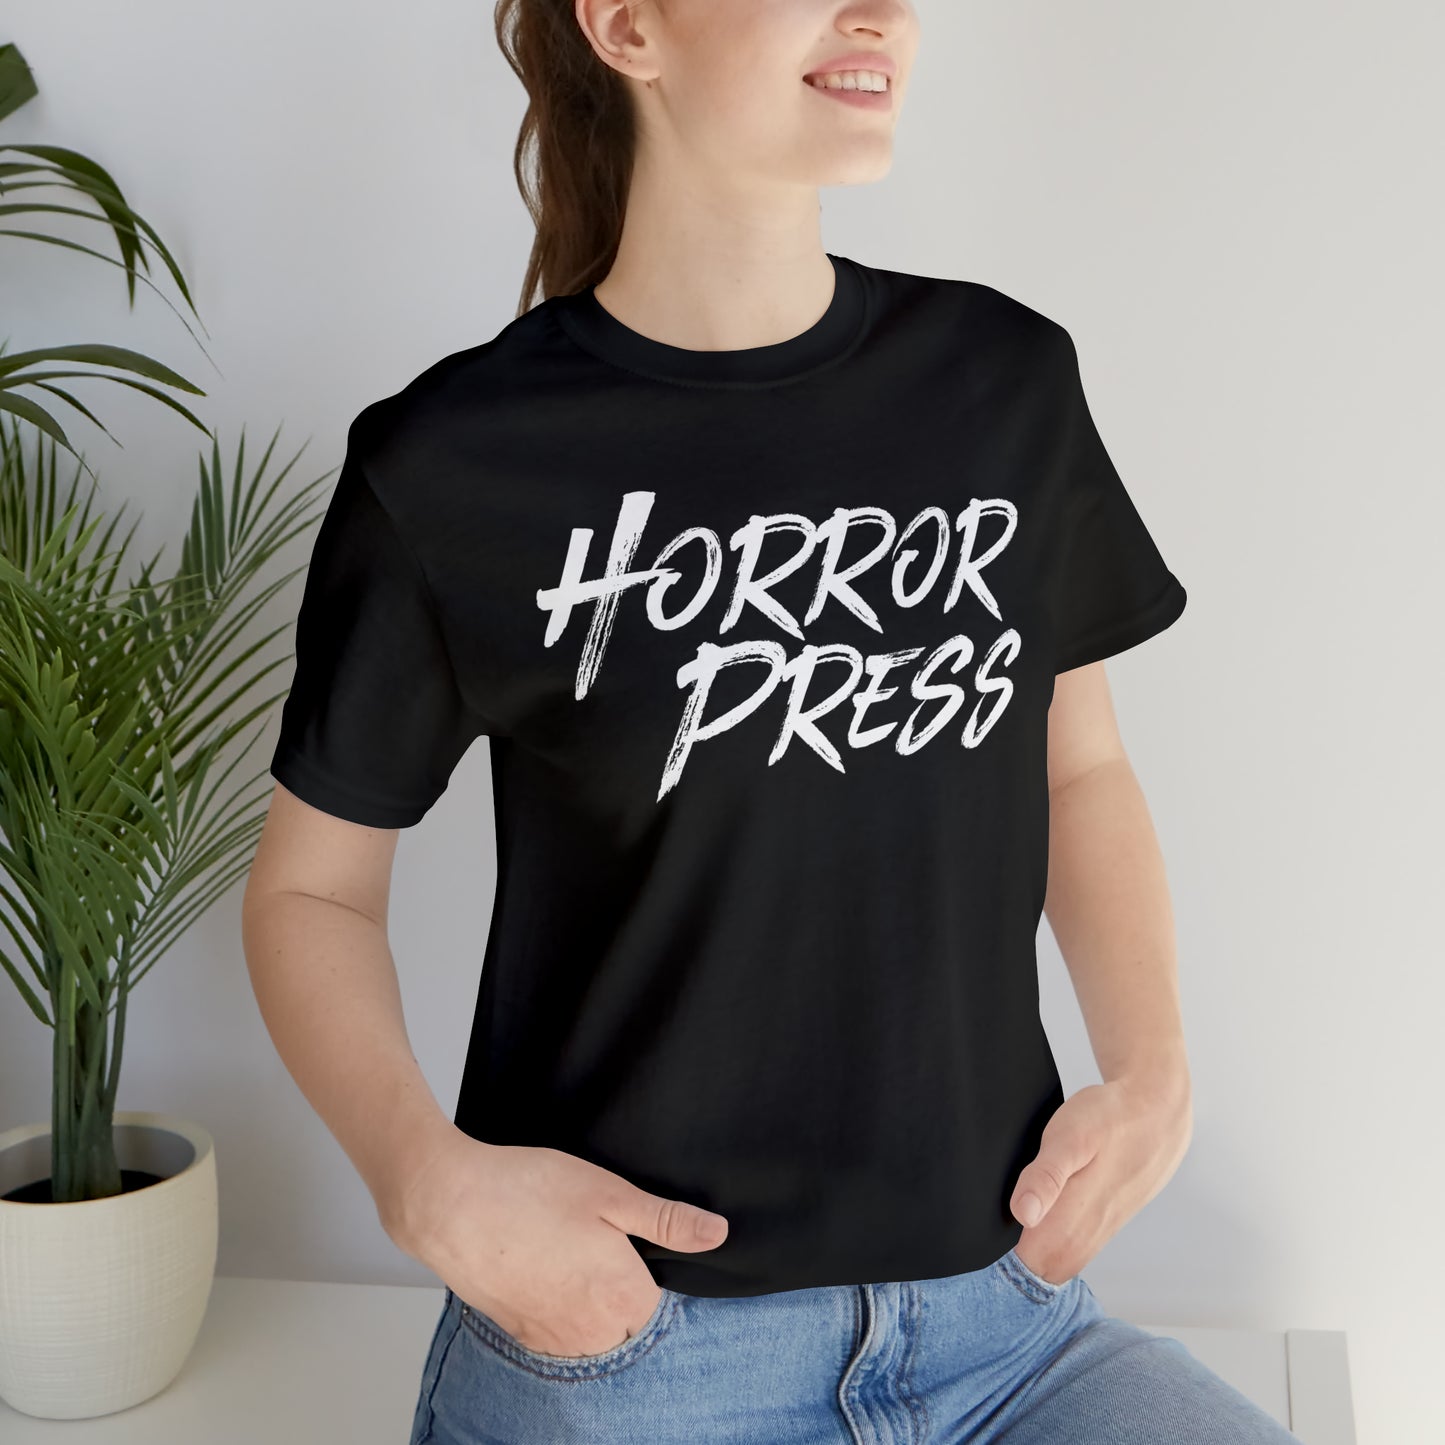 Horror Press T-Shirt - Official Horror Press Unisex Tee - Horror Movie Fan Gift Shirt  - Horror Press Horror Fan Shirt - Scary Movie Fan Shirt - Horror Game Fan Tee - White on Black T-Shirt